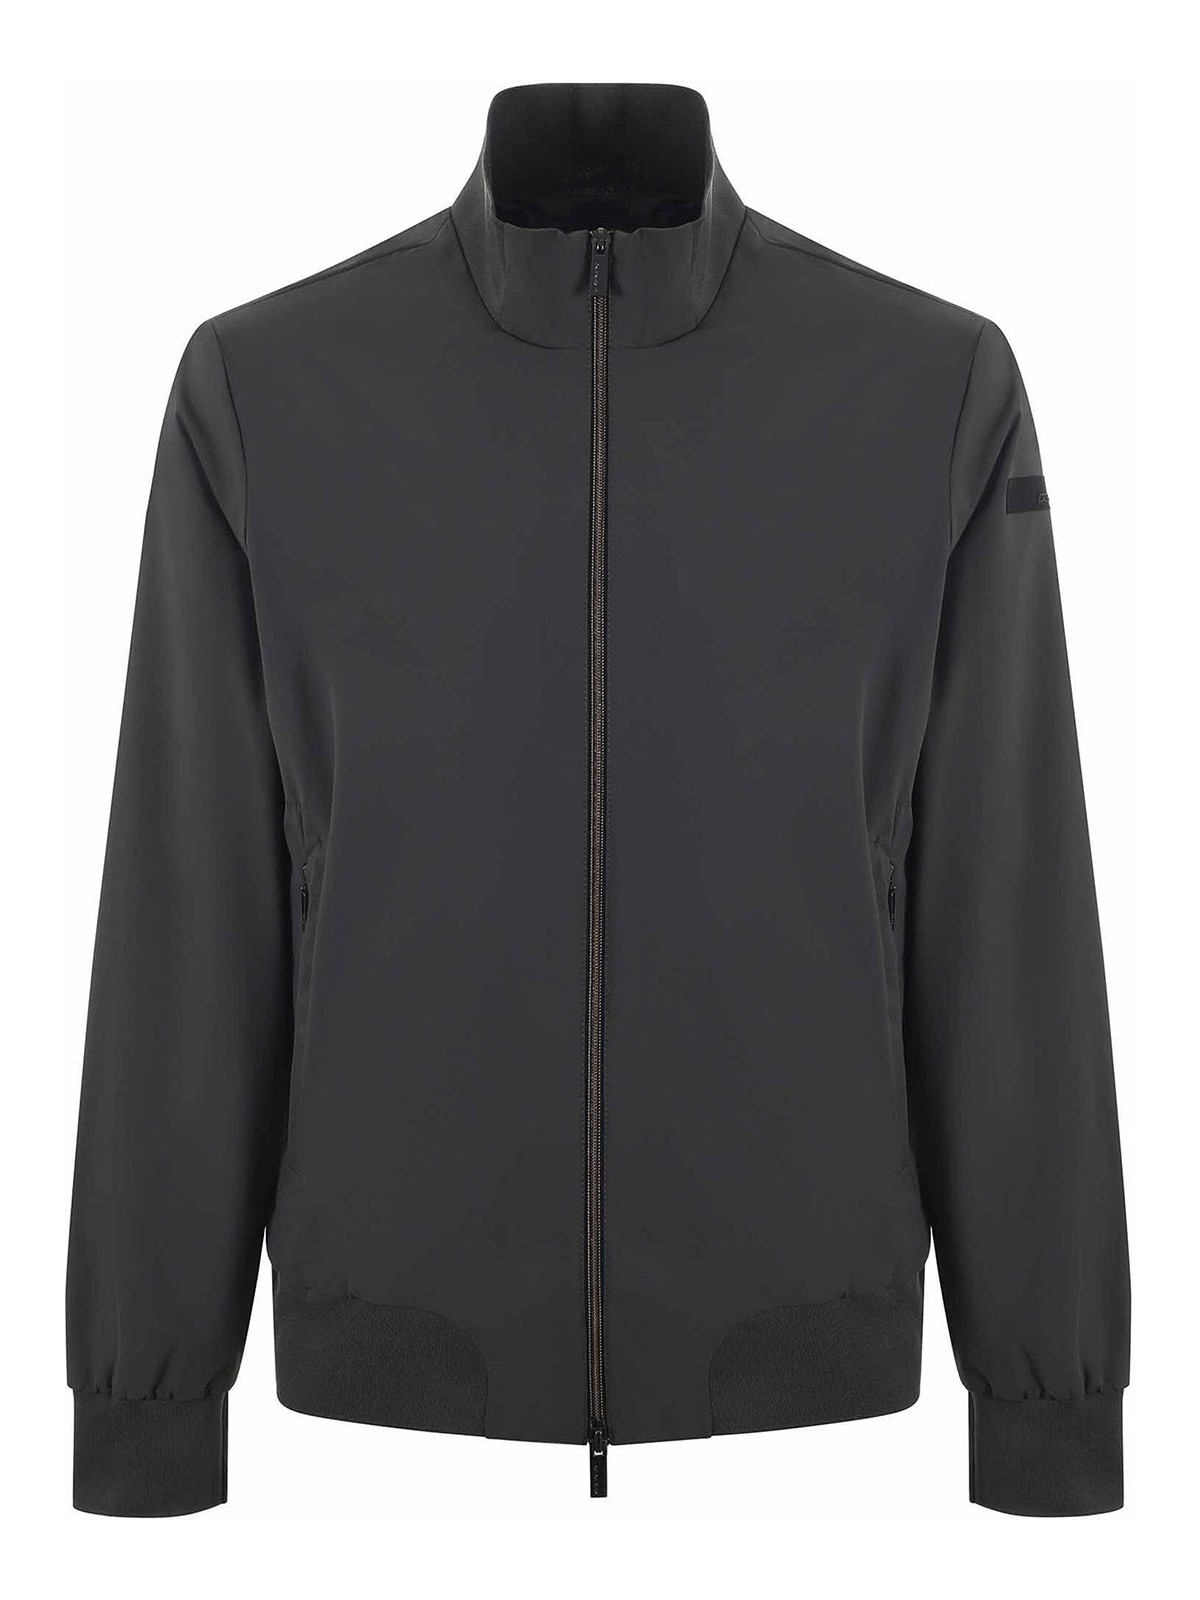 Rrd Roberto Ricci Designs Jacket In Gray